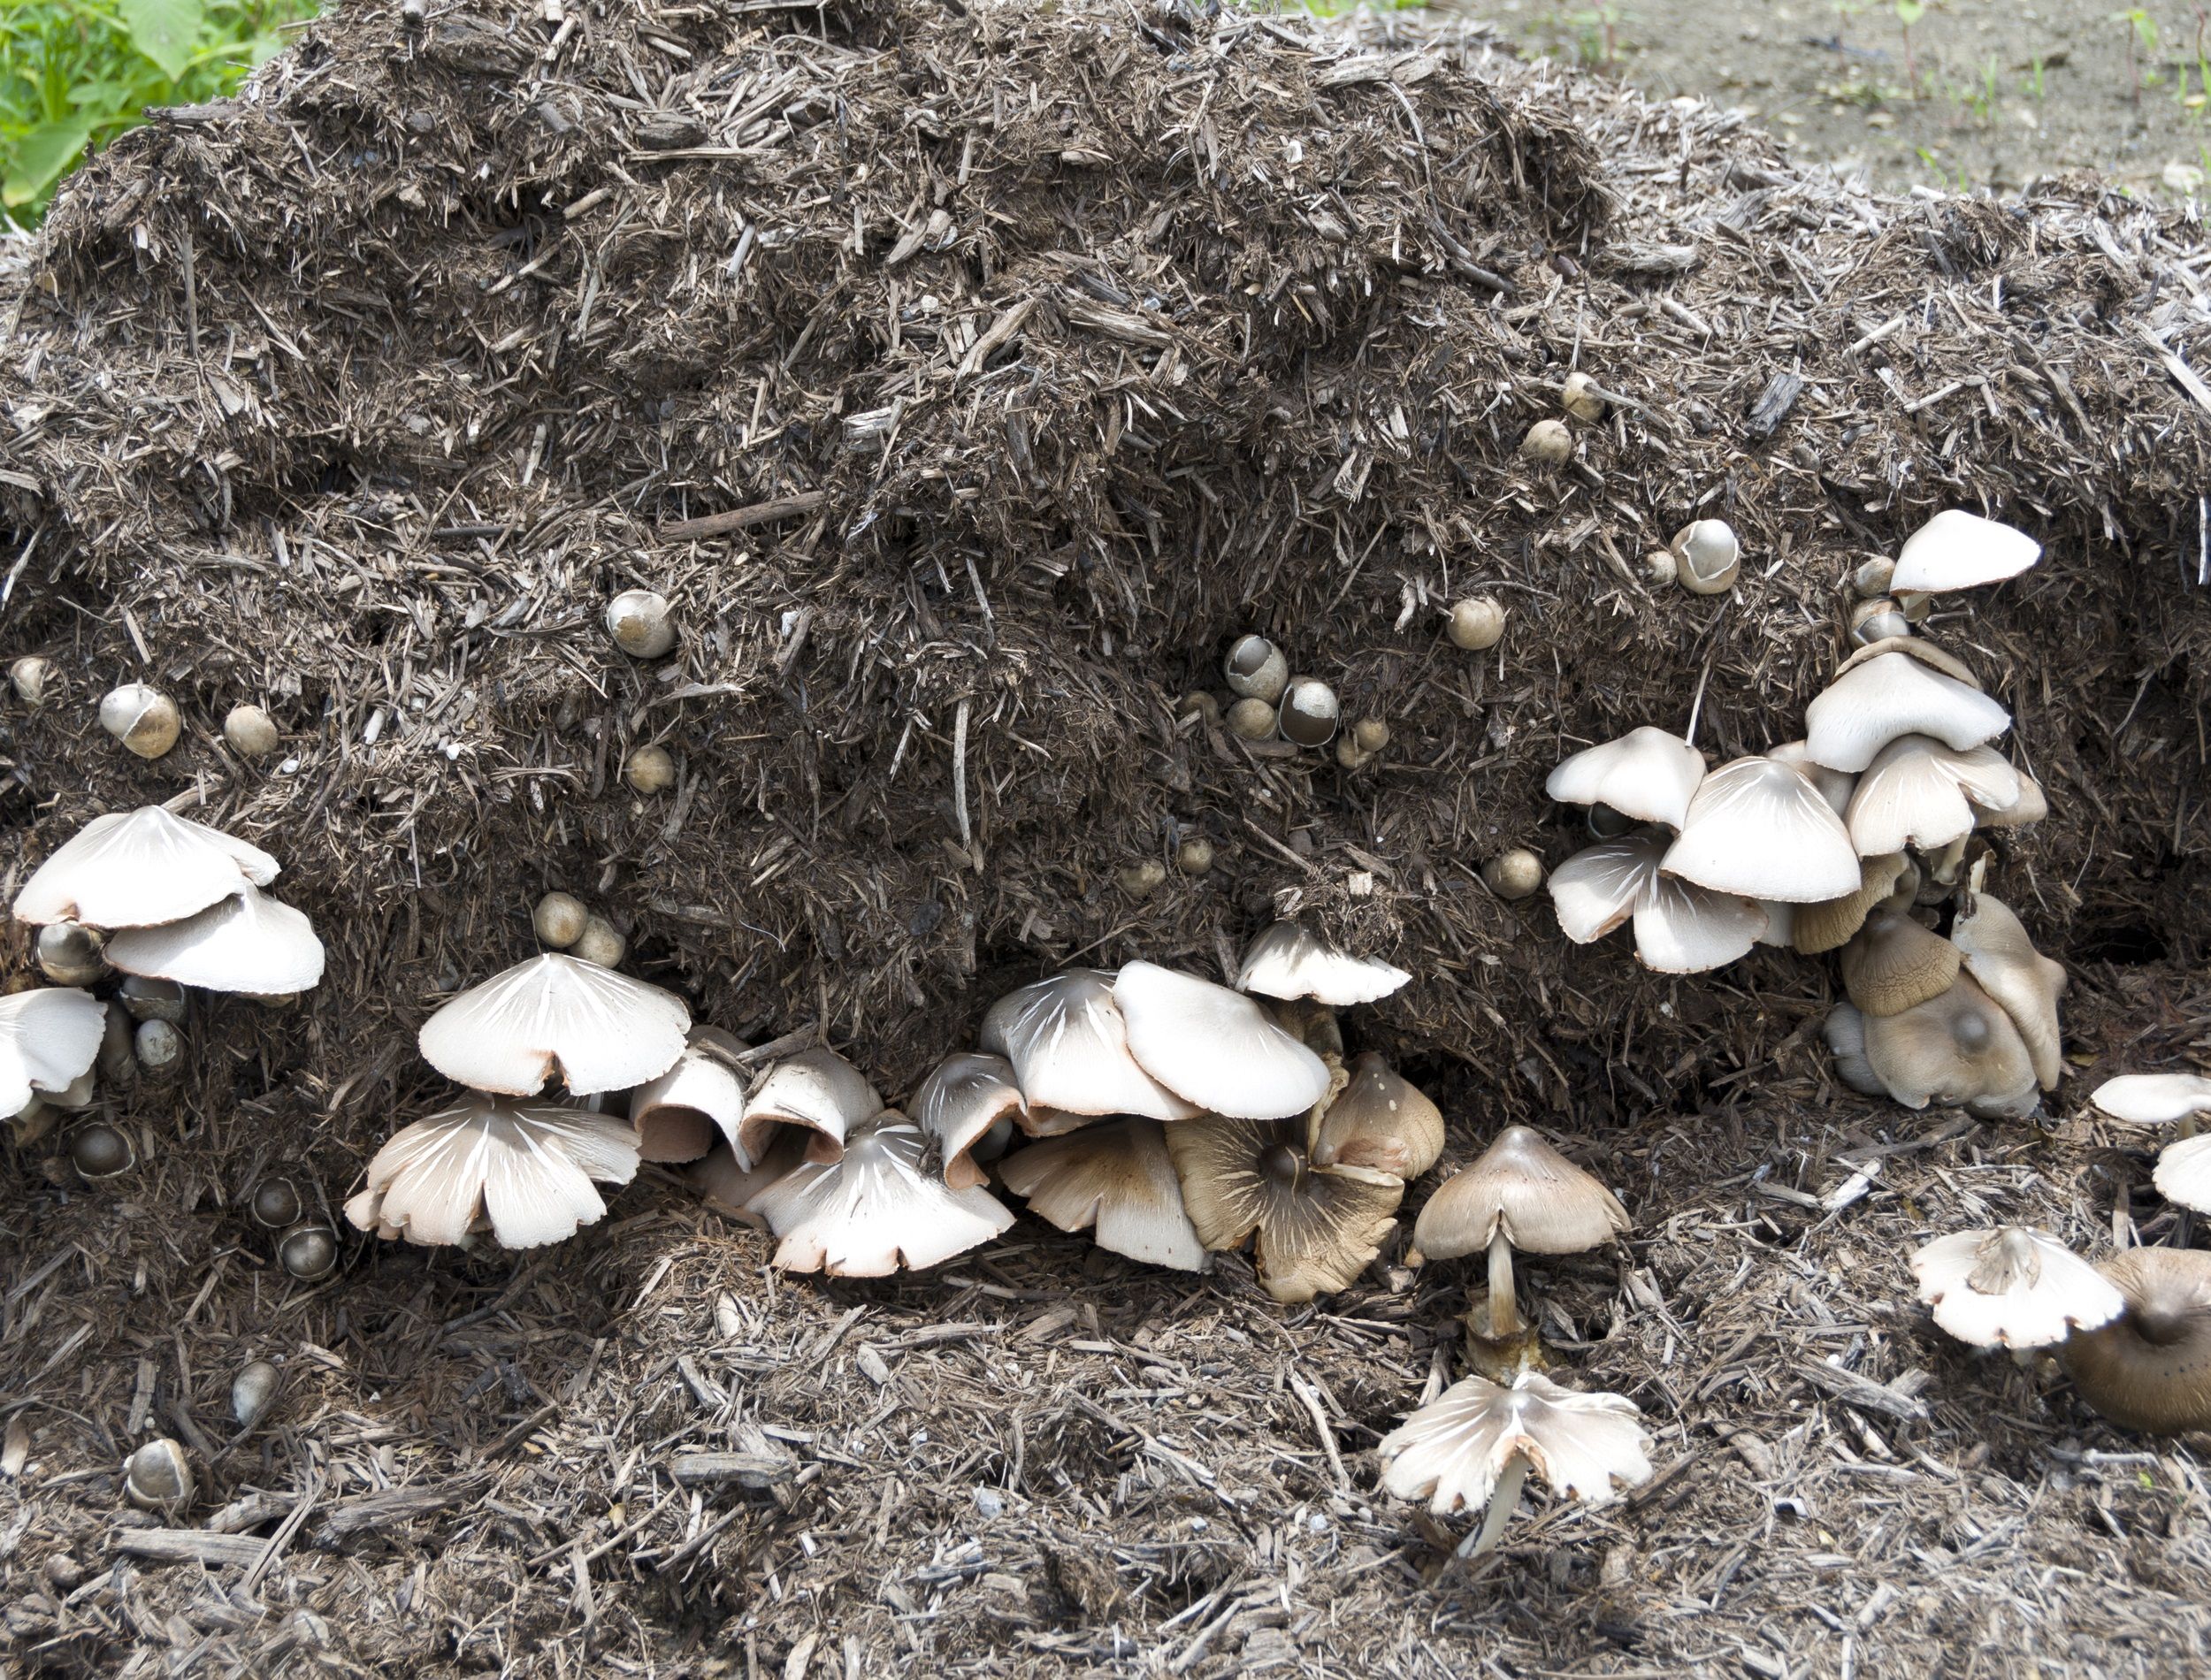 Mushroom that grows in the bagasse